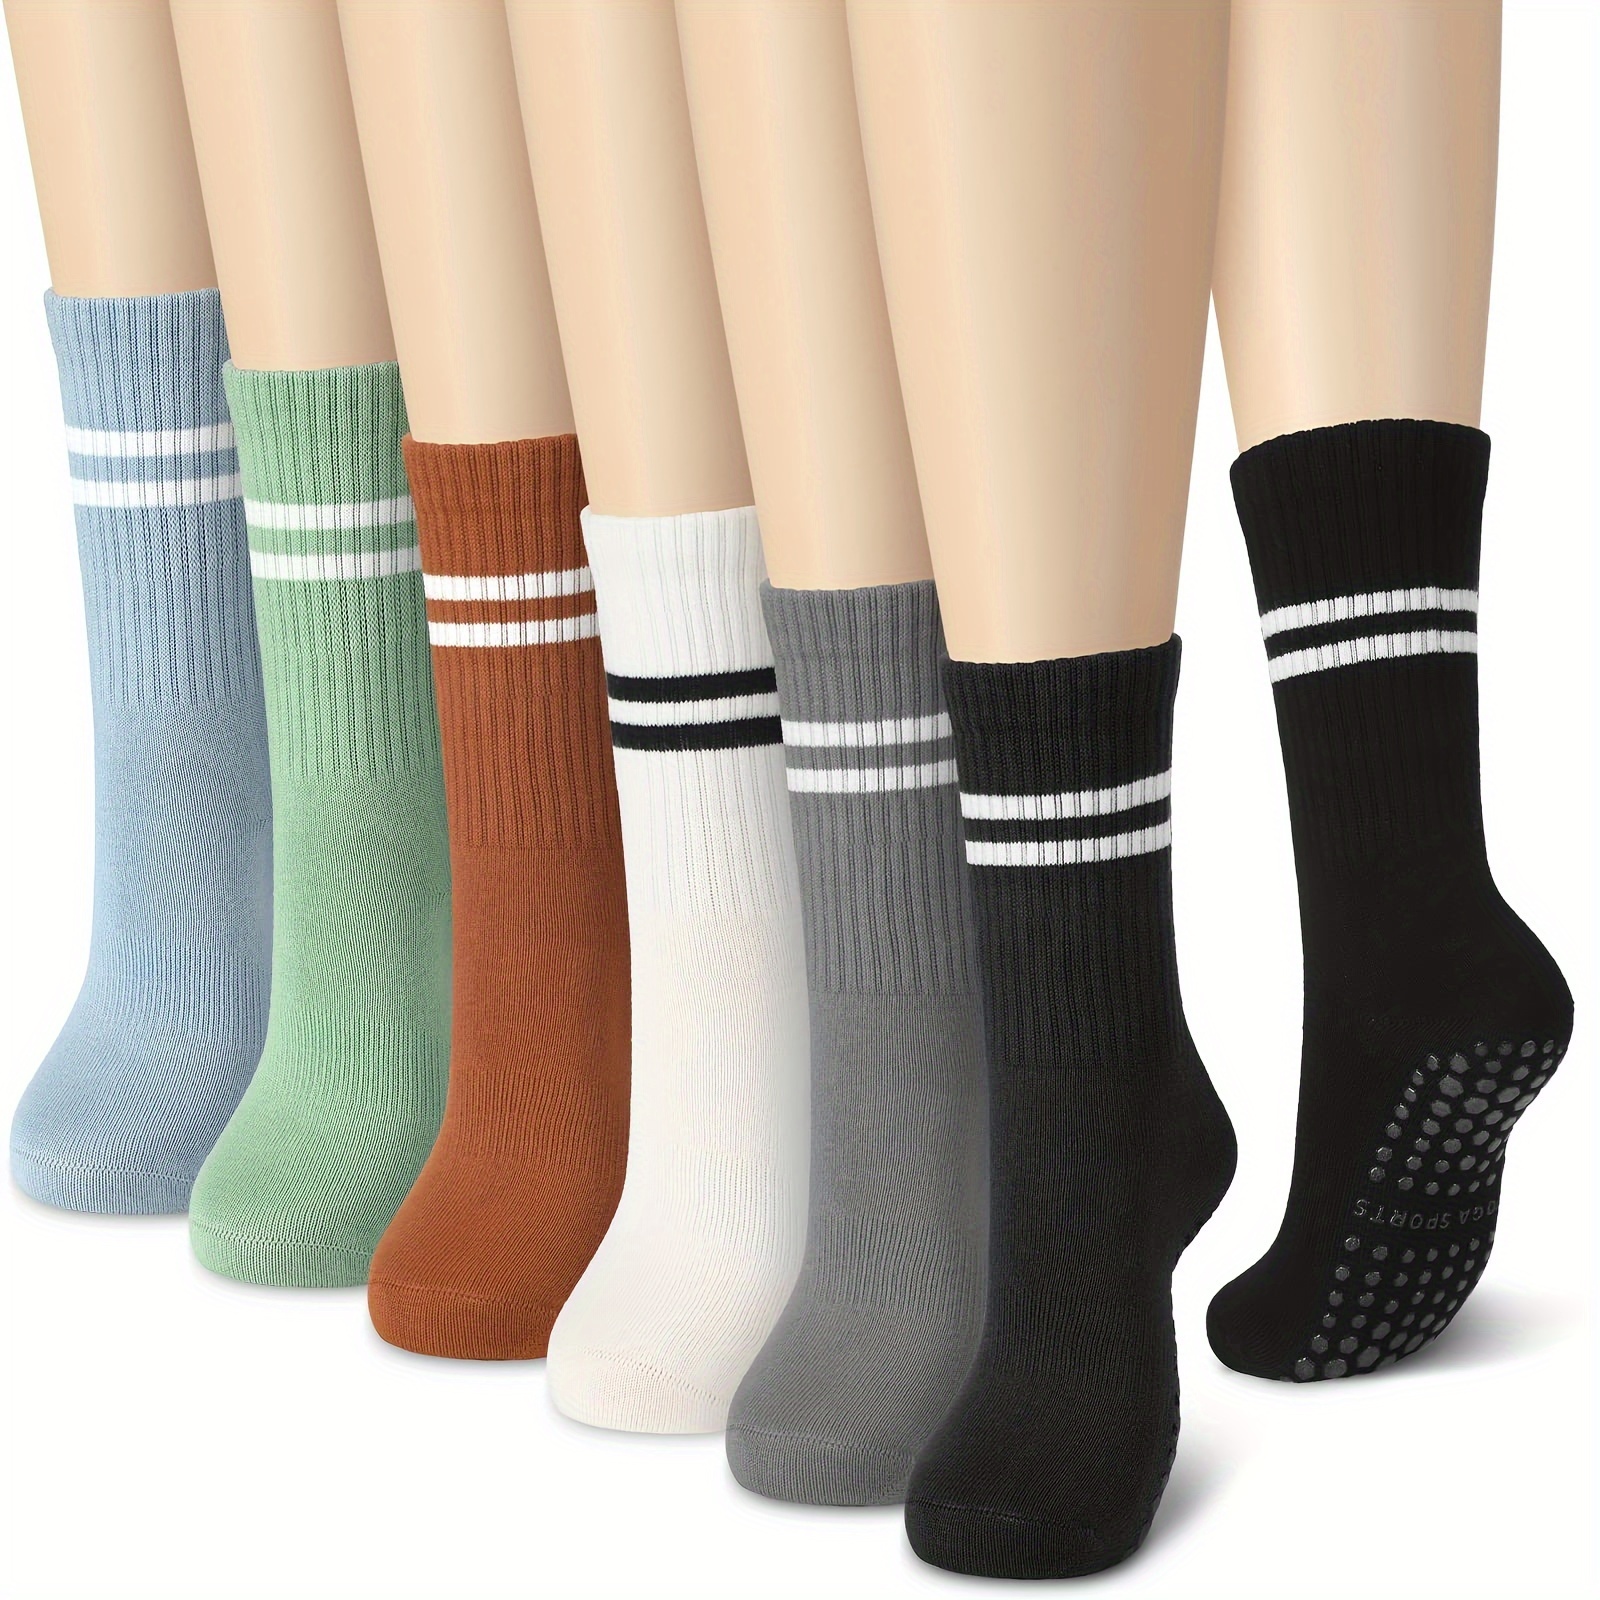  Grip Socks For Pilates, Yoga, Hospital, Barre, Cushioned  Ankle Sports Socks Women Non Slip Slipper Socks 2 Pairs Black And Grey